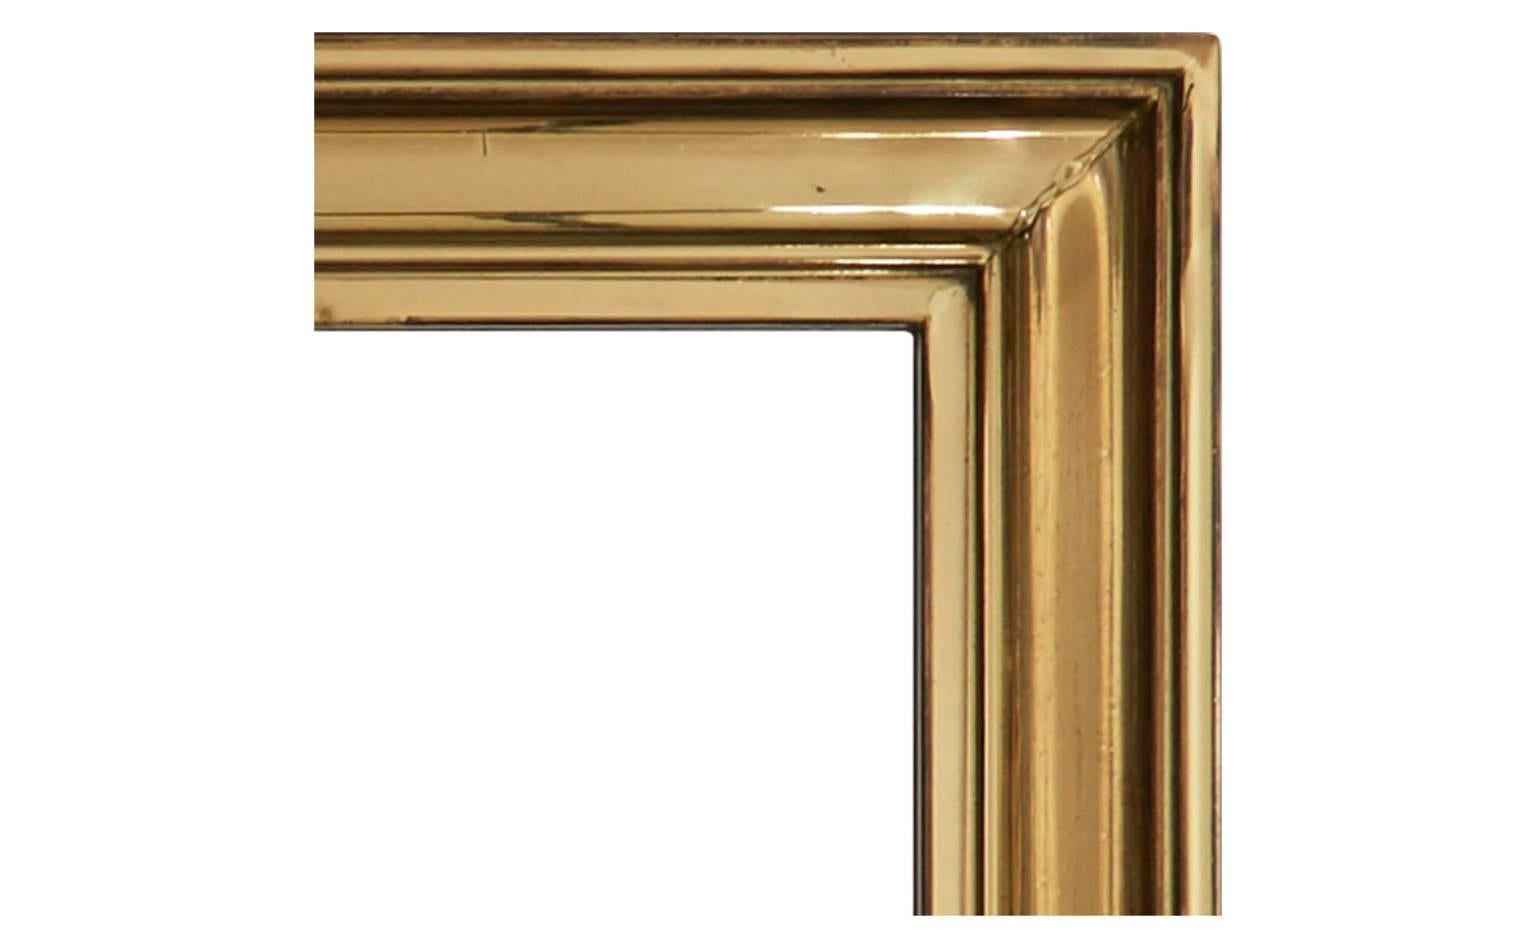 Measures: 21.25" W x 2" D x 28.25" H. 
Original mirror,
brass frame,
20th century,
Barcelona.